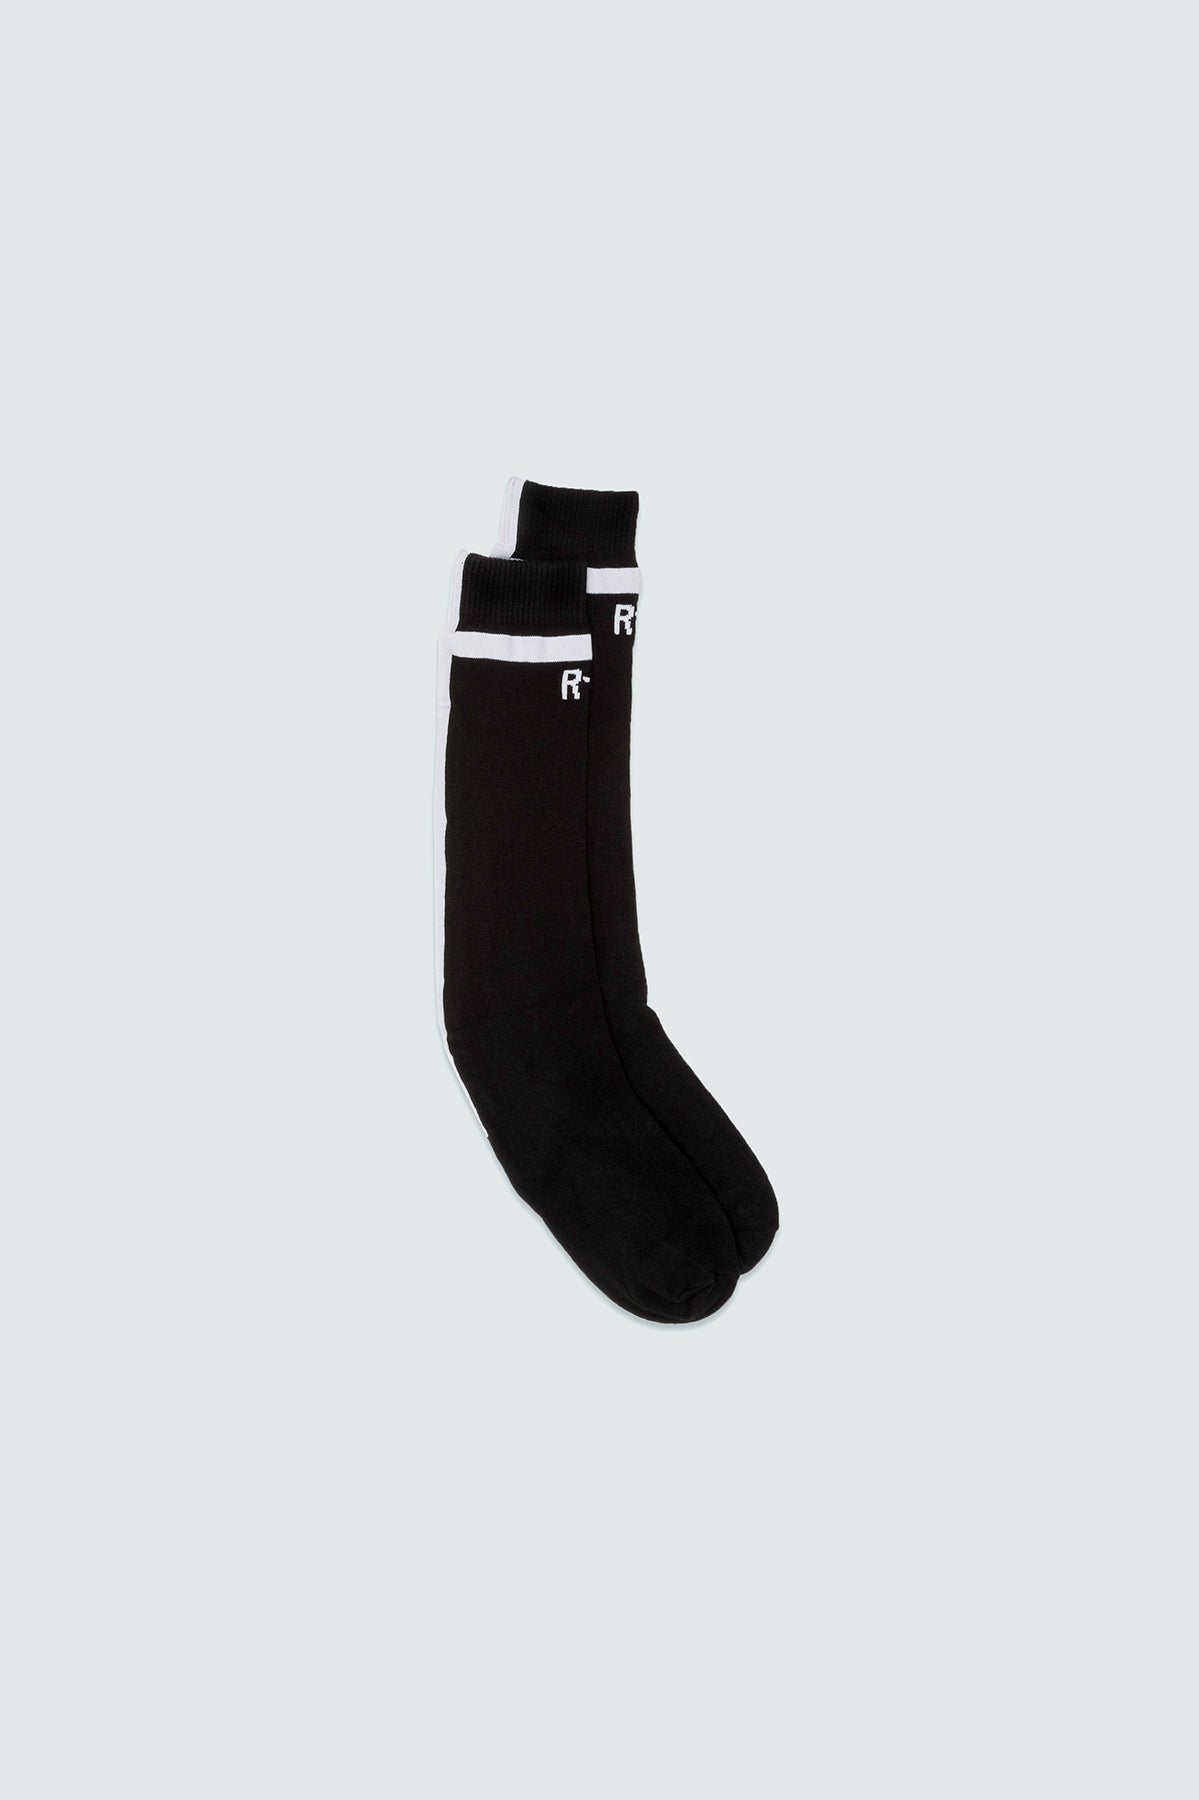 Long Black Cotton Socks